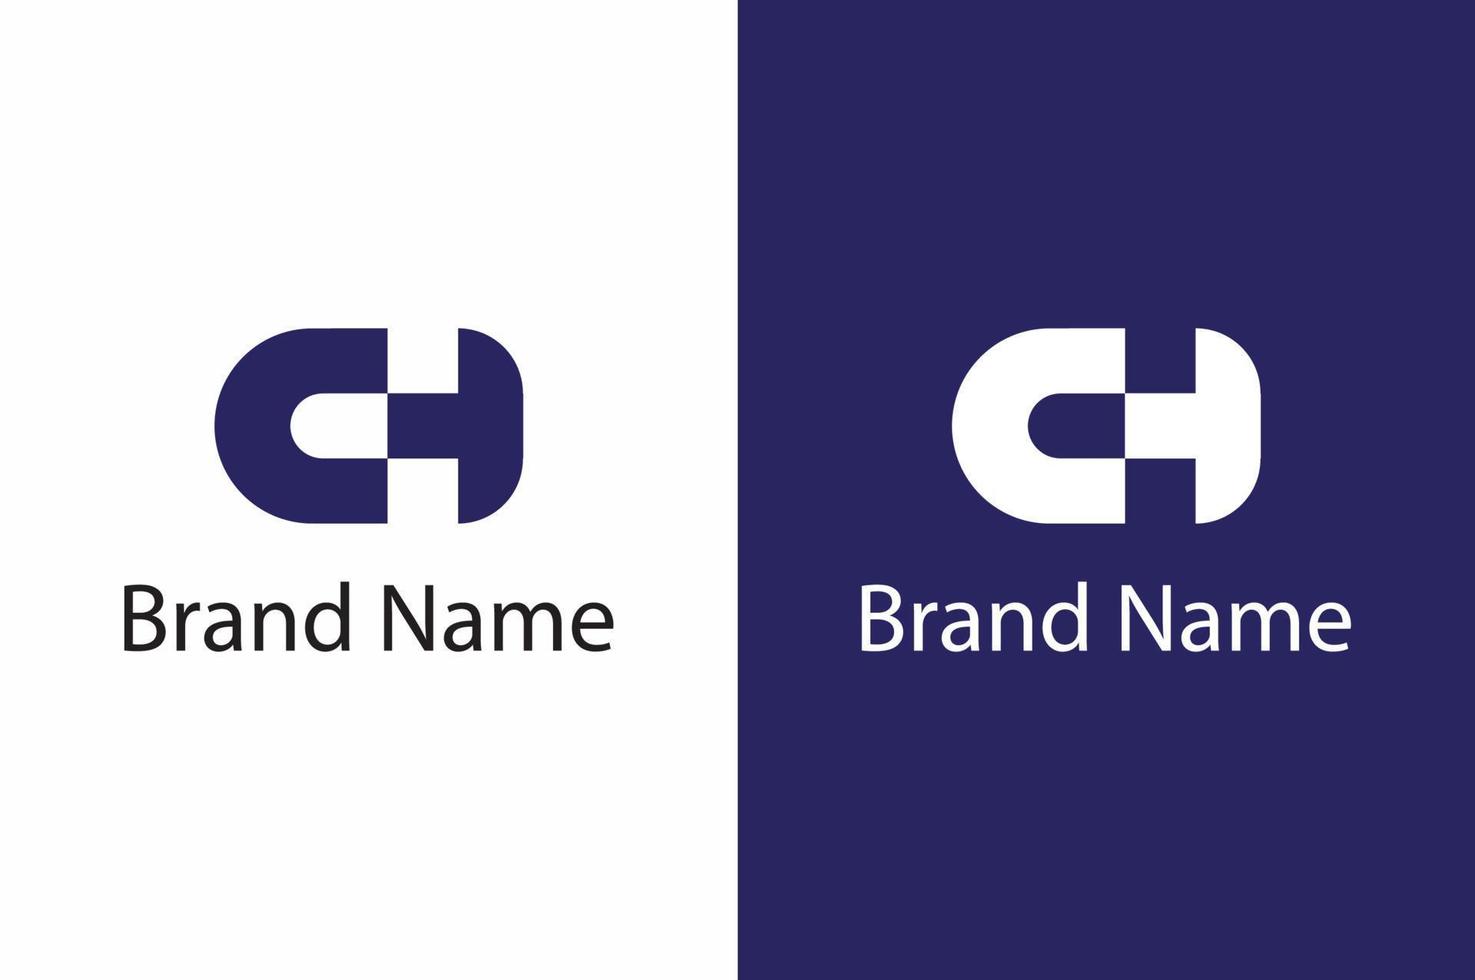 ch hc brief logo ontwerp vector. illustratie van letter ch hc monogram logo vector